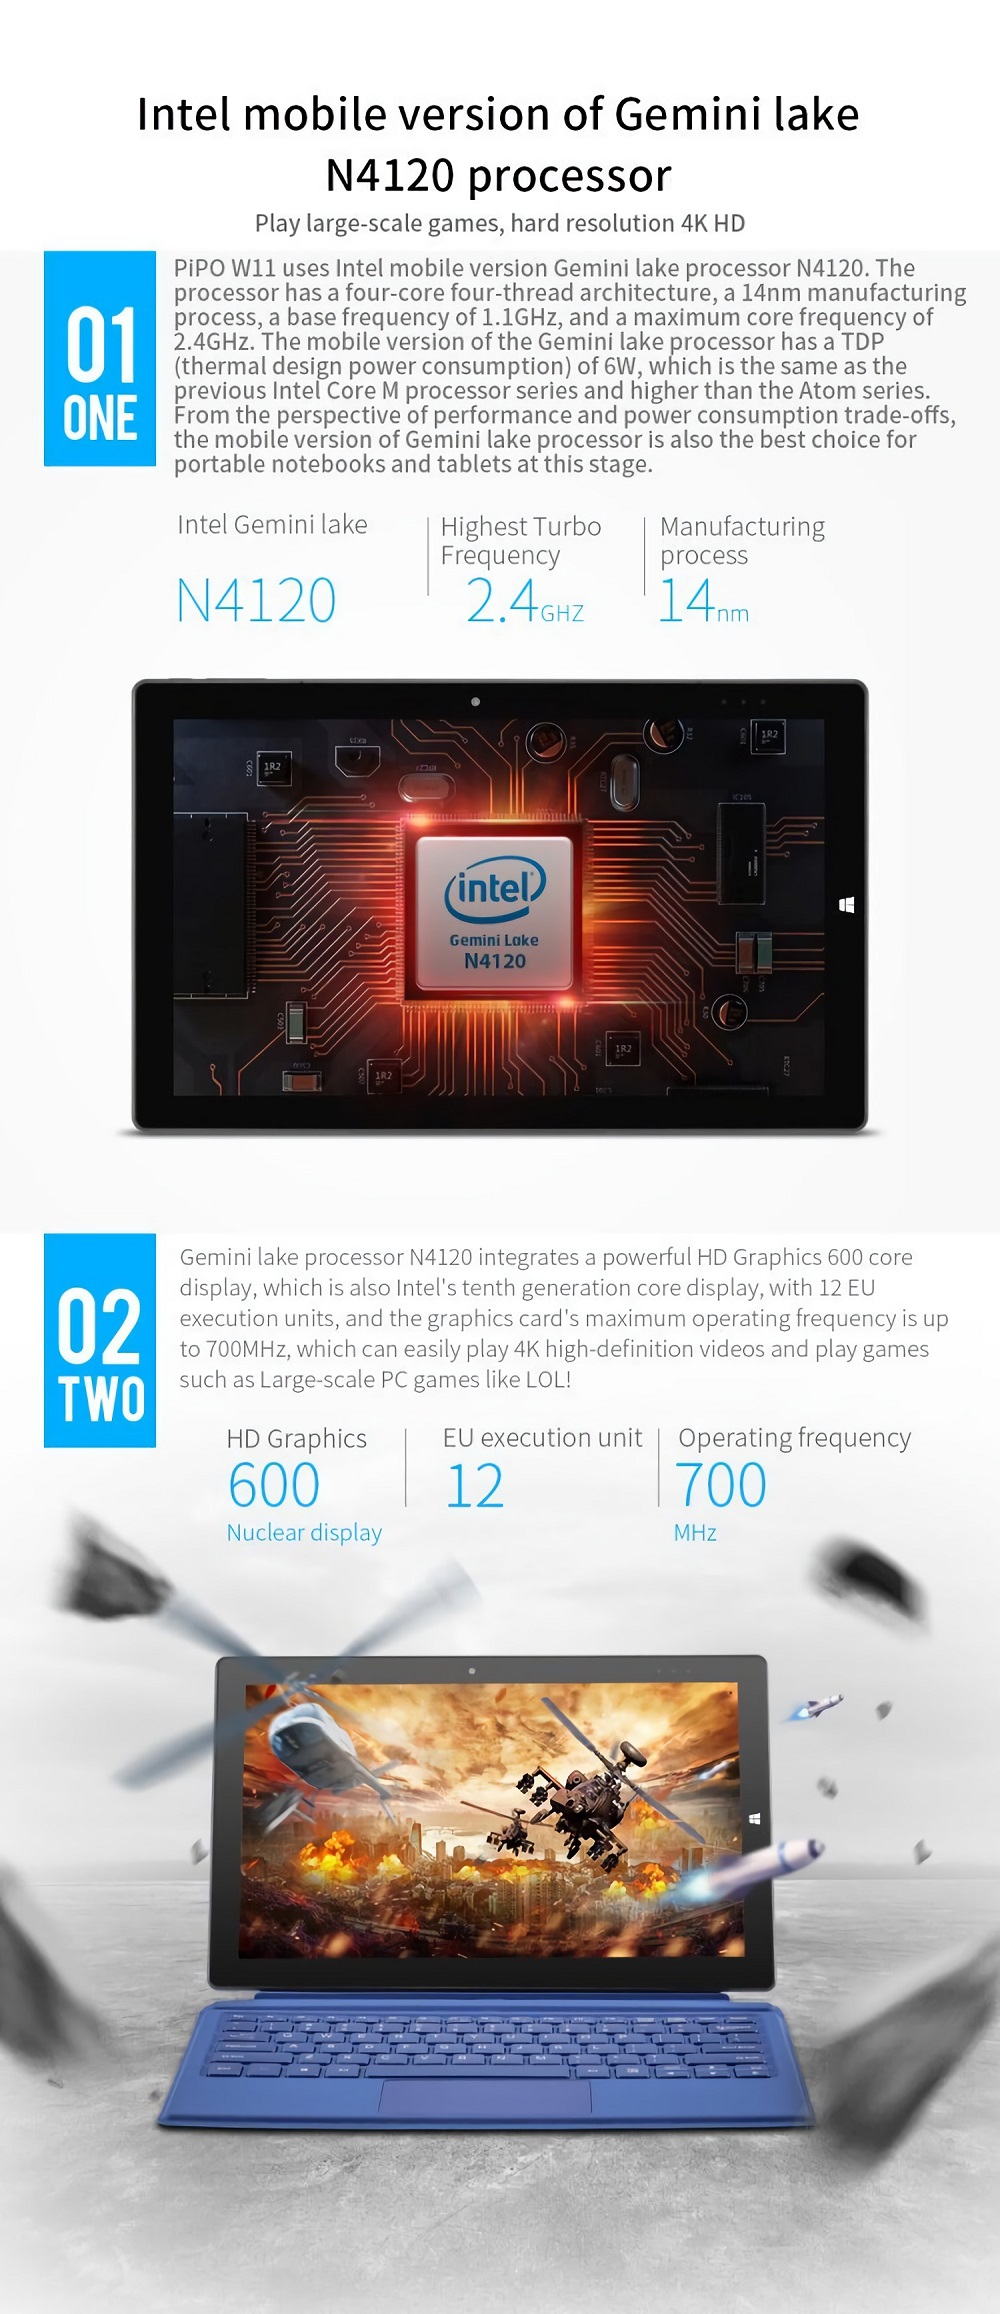 PIPO W11 Intel Gemini Lake N4120 8GB RAM 128GB ROM 11.6 Inch Windows 10 Tablet with Keyboard Stylus Pen 5